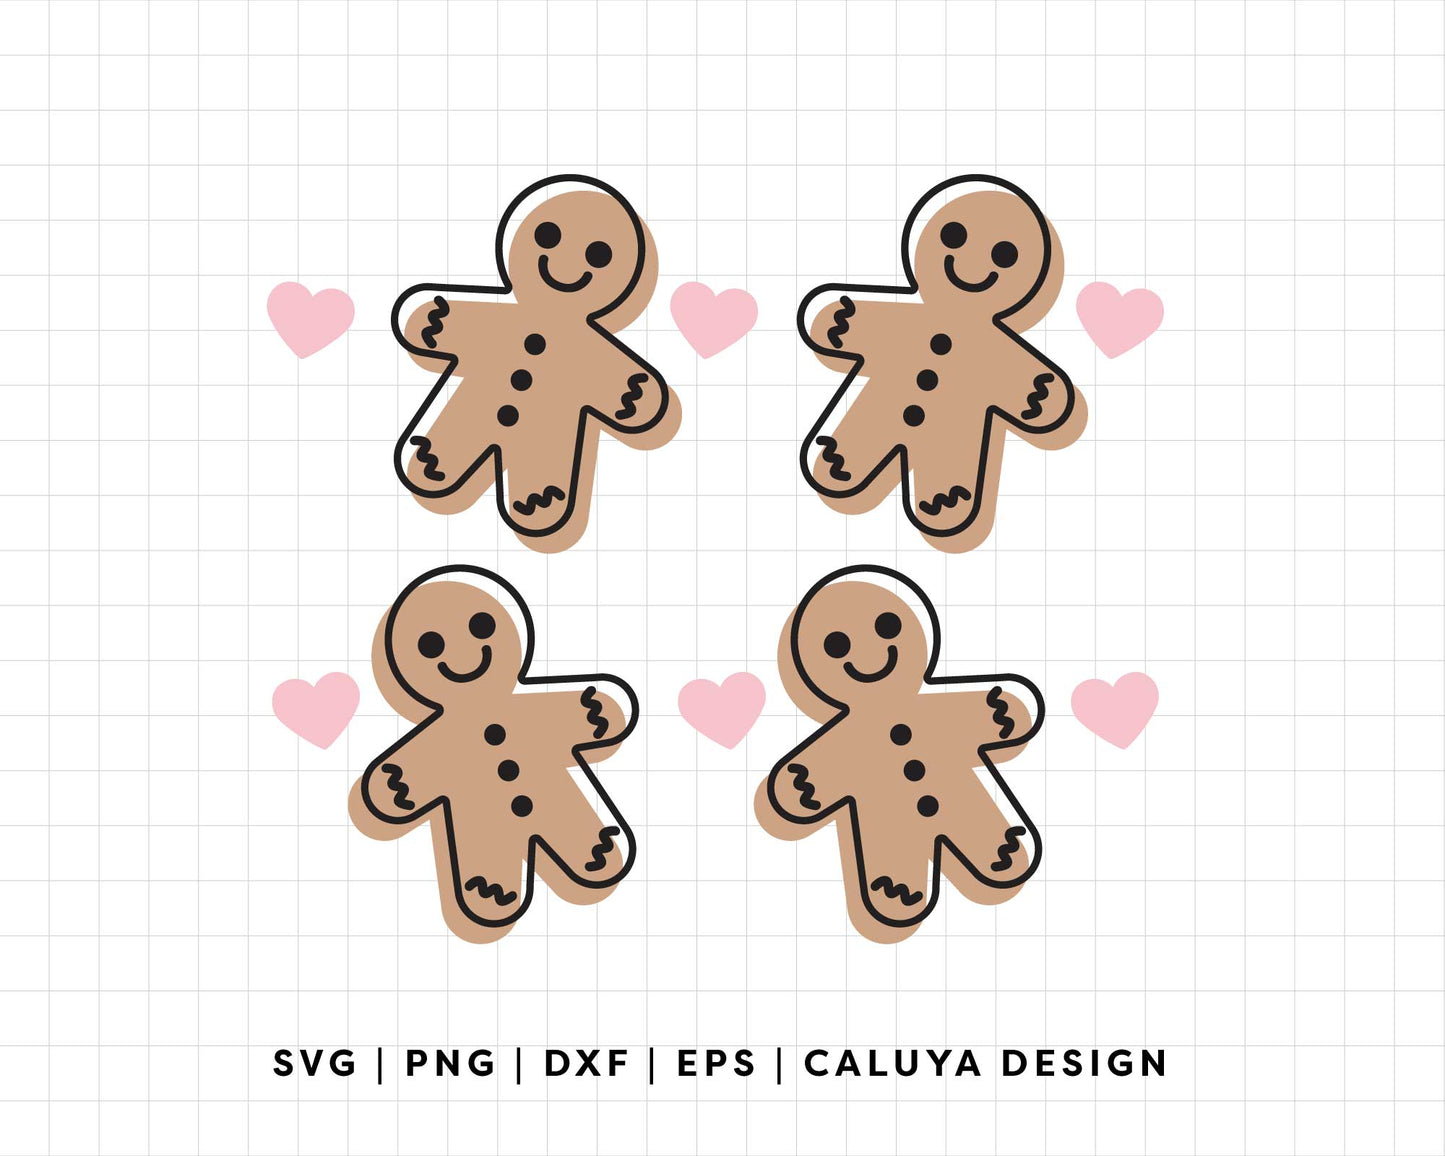 FREE Cute Gingerbread Man SVG | Heart Christmas SVG For Cricut